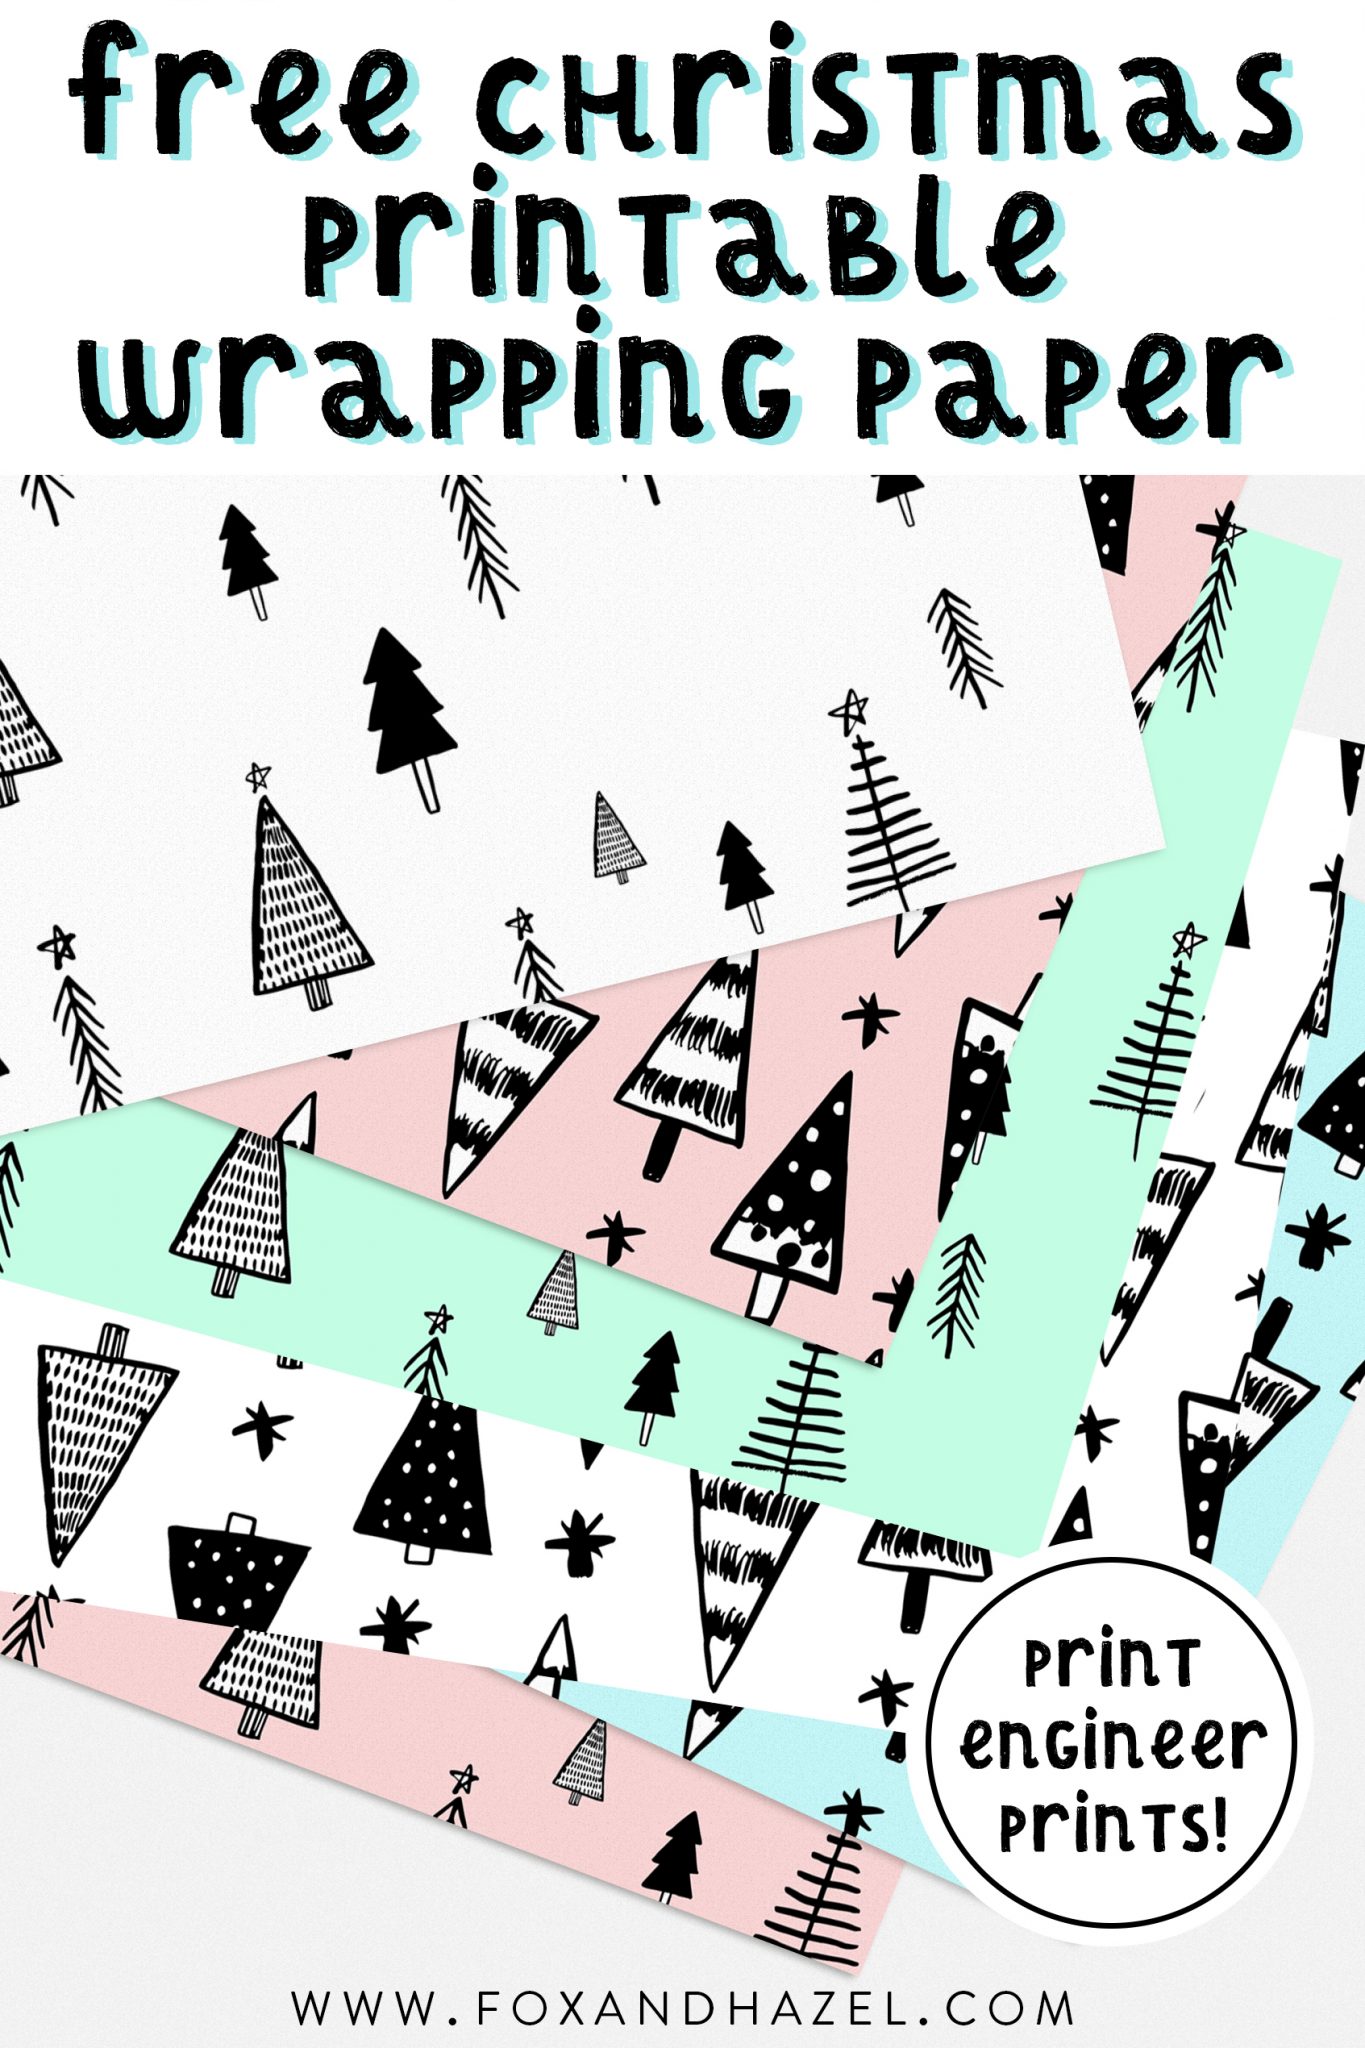 printable-christmas-wrapping-paper-fox-hazel-free-art-designs